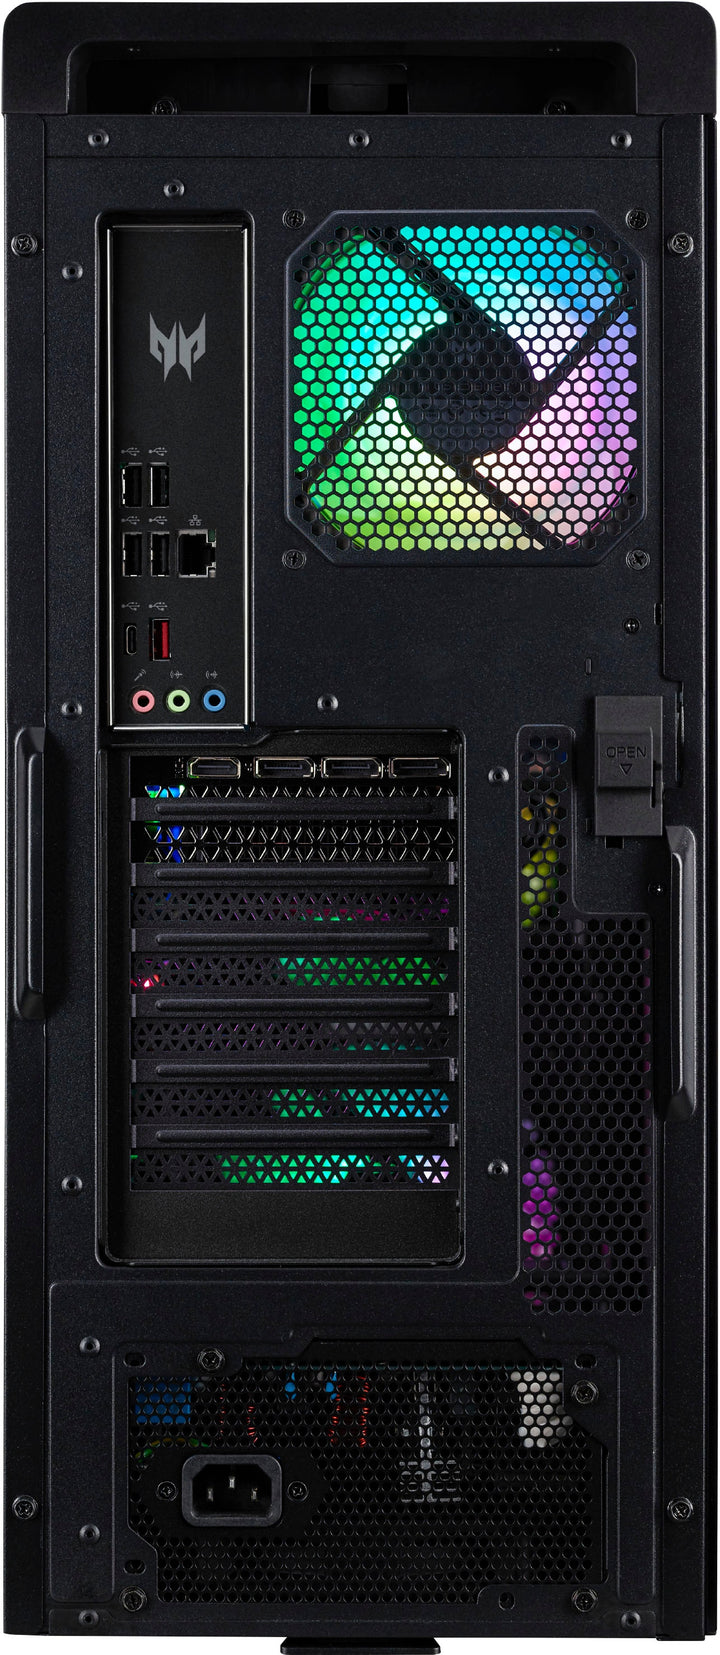 Acer - Predator Orion 5000 Gaming Desktop - Intel Core i7-12700F - 16GB DDR5 Memory - NVIDIA GeForce RTX 3080 - 1TB Gen 4 SSD_2